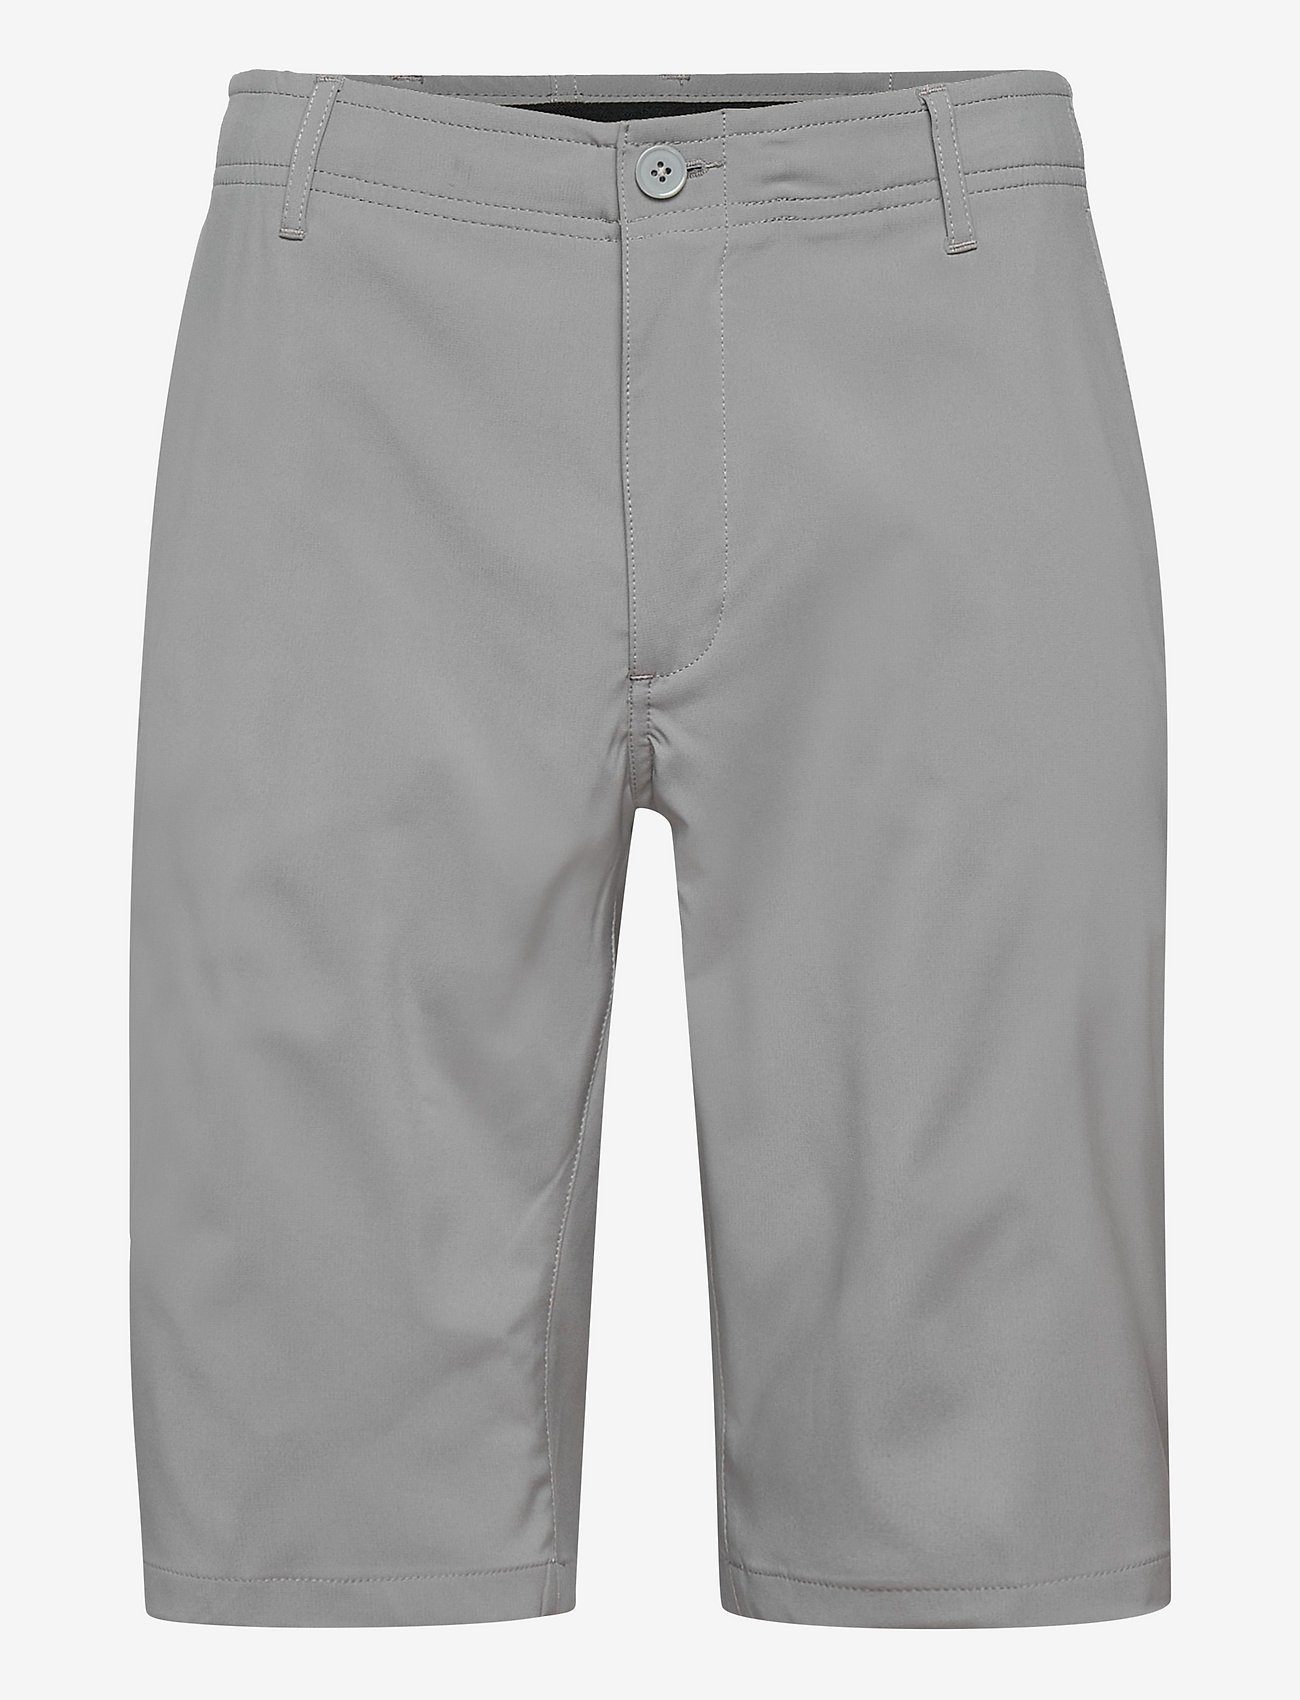 Abacus - Men Cleek flex shorts - szorty golfowe - grey - 0